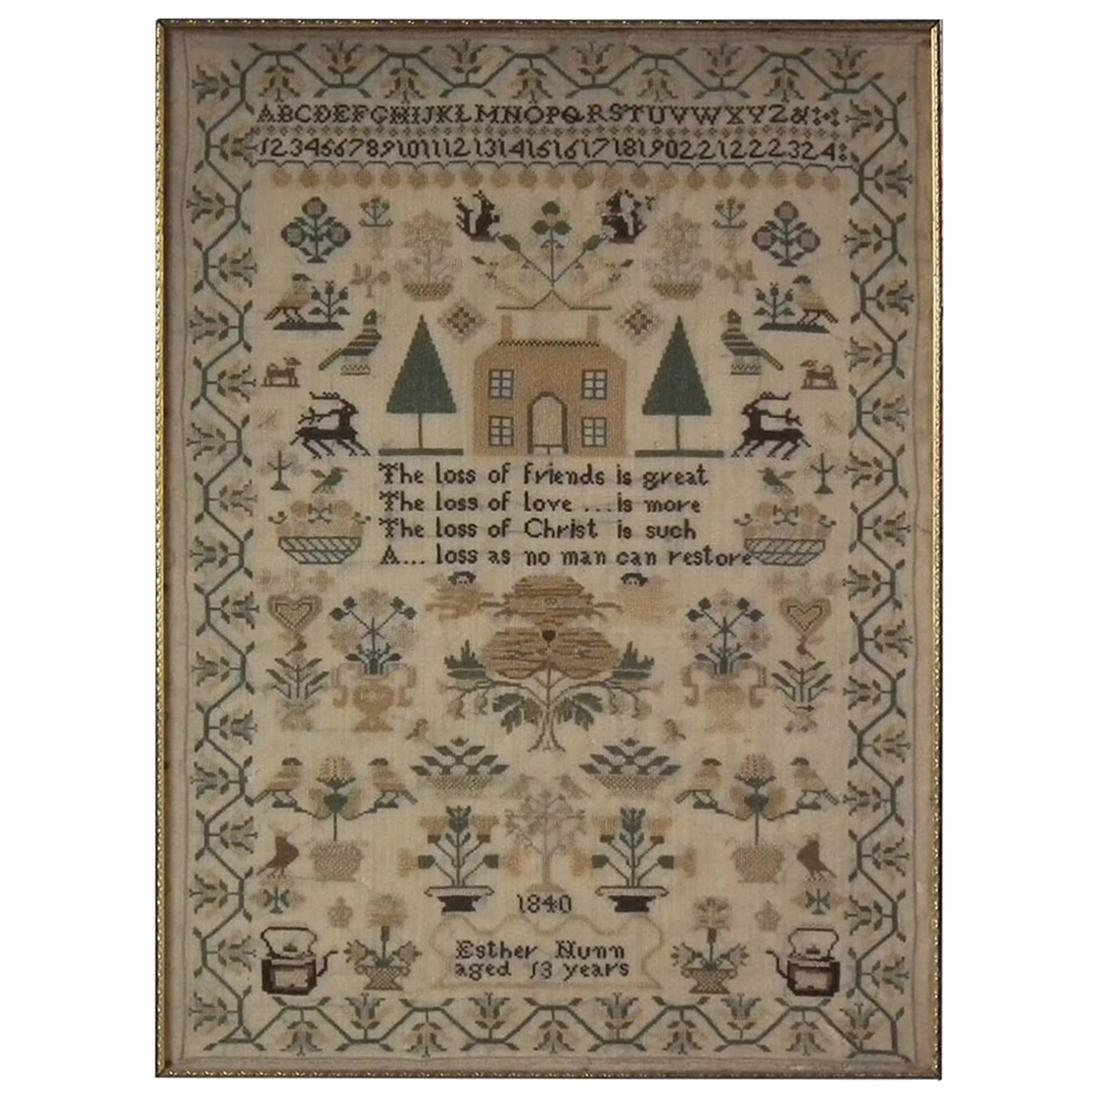 Victorian Folk Art Textile Sampler, Dated 1840 by Esther Nunn